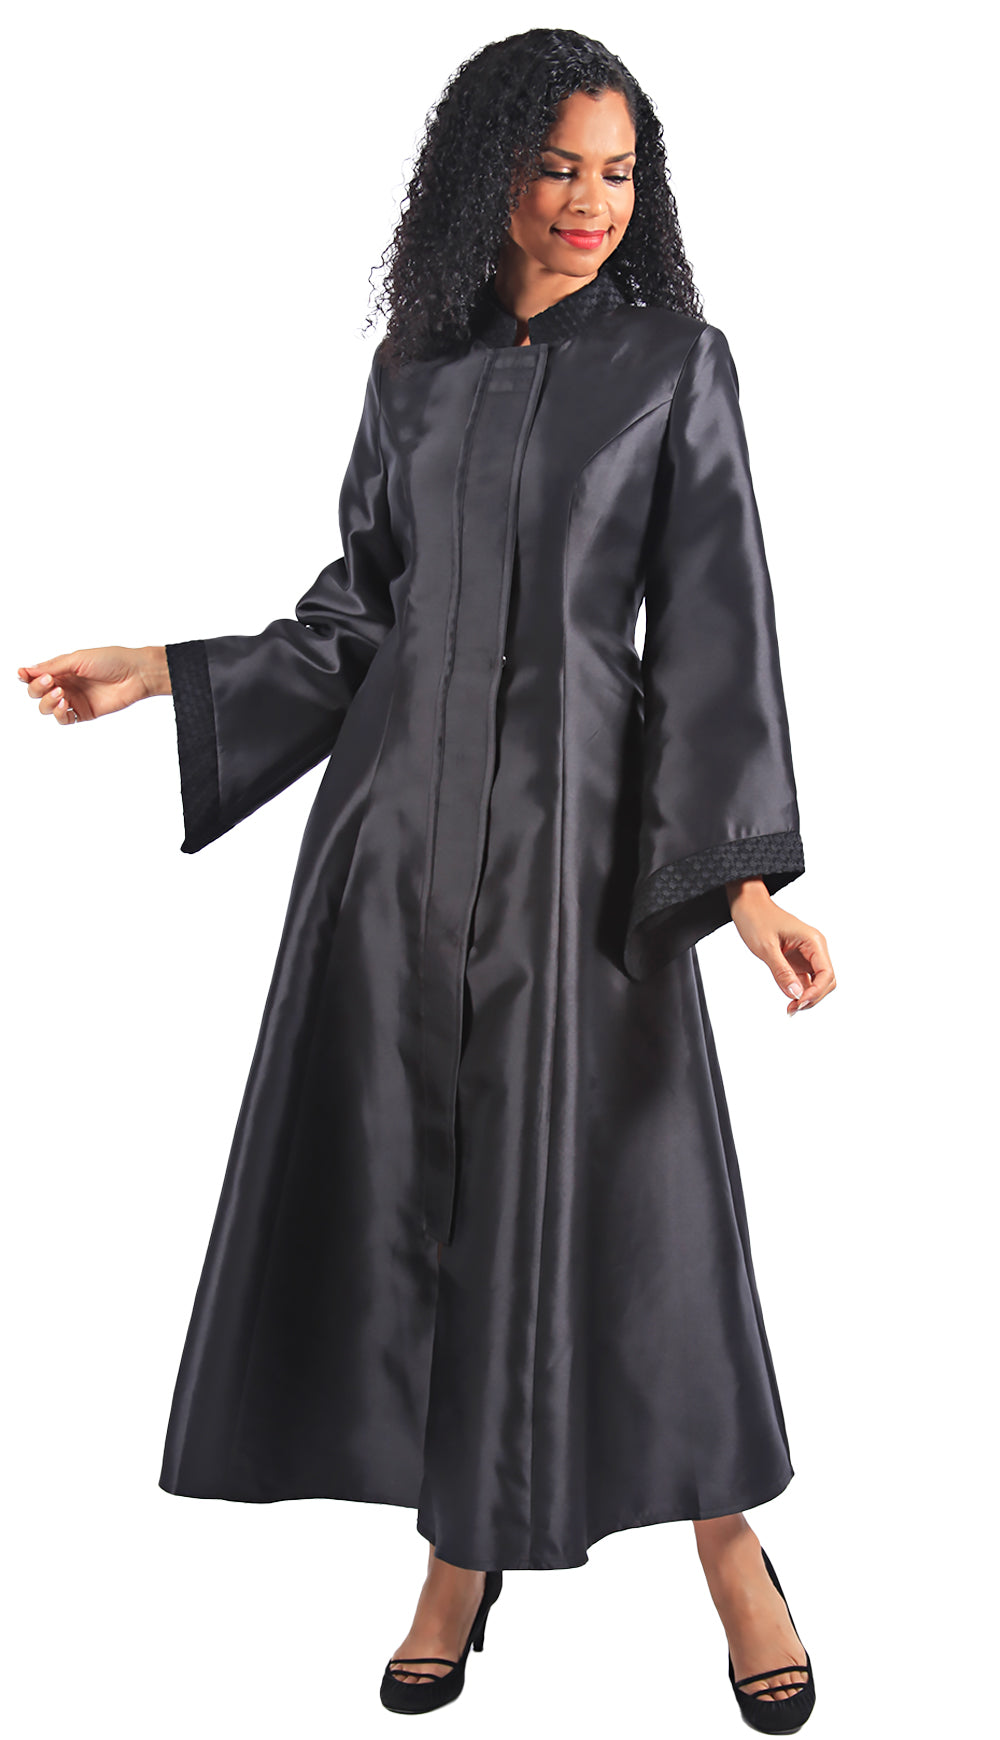 Diana Church Robe 8595-Black/Black - Church Suits For Less